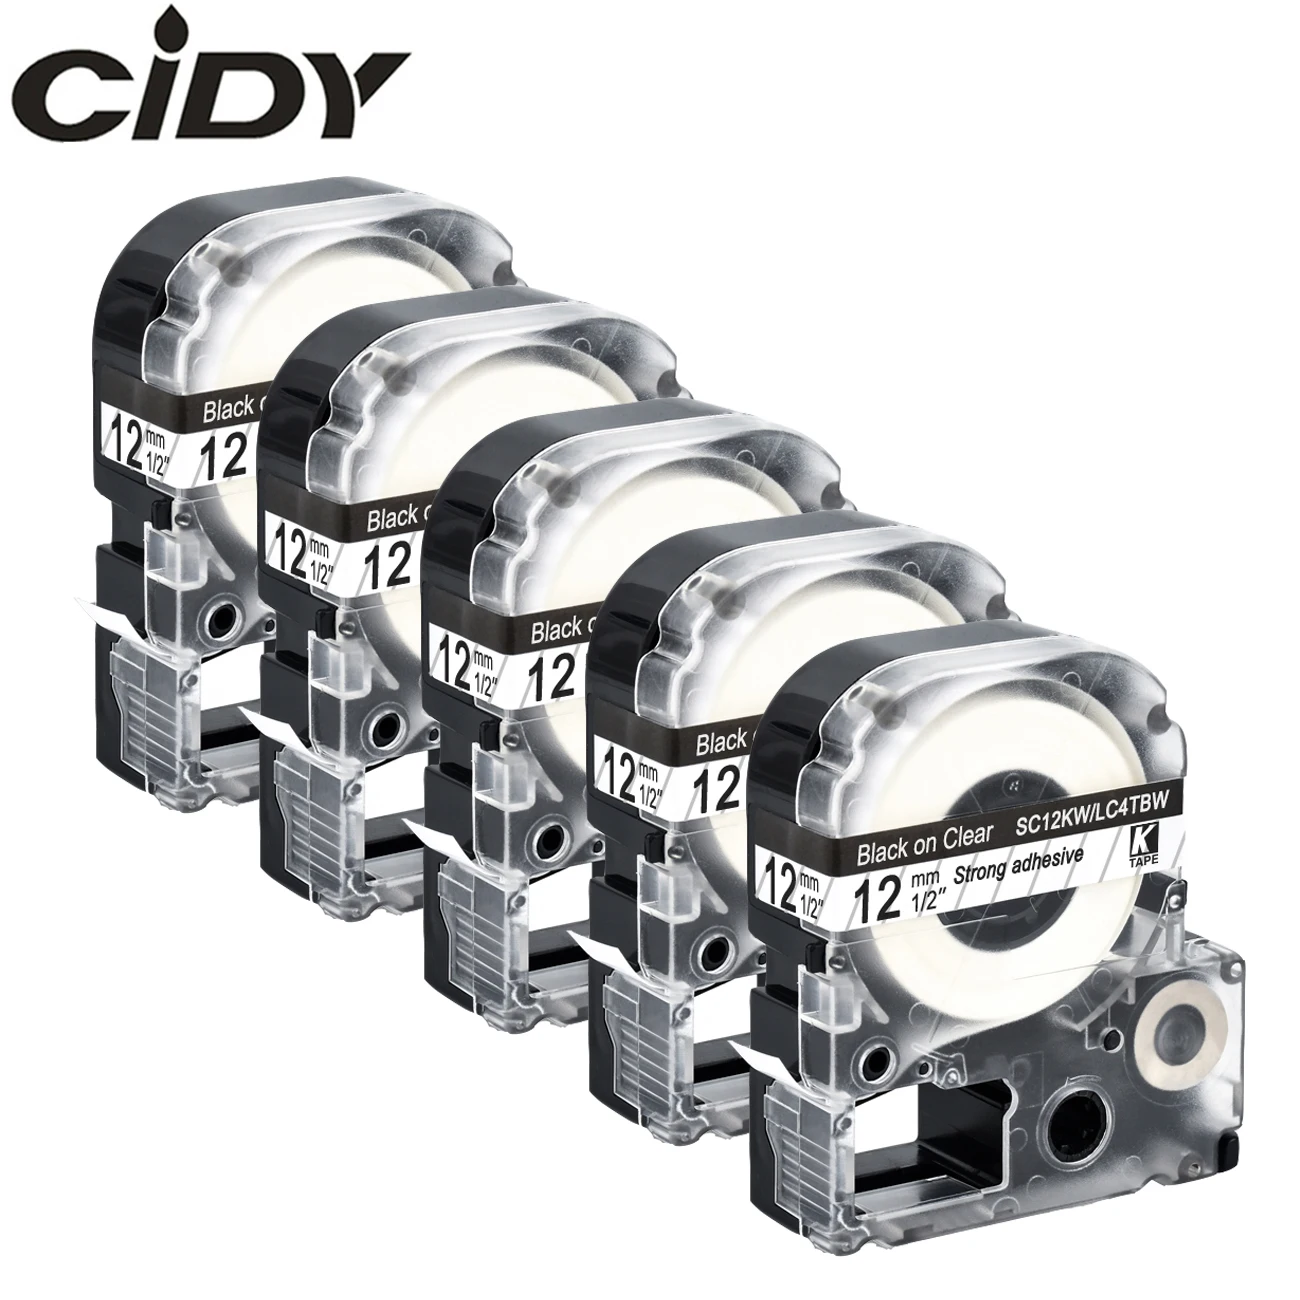 

Cidy 5Pcs For Epson/KingJim Printer ST12KW LC-4TBW For LW-300 LW-400 12MM Black on Clear SS12KW Label Cassete SR150